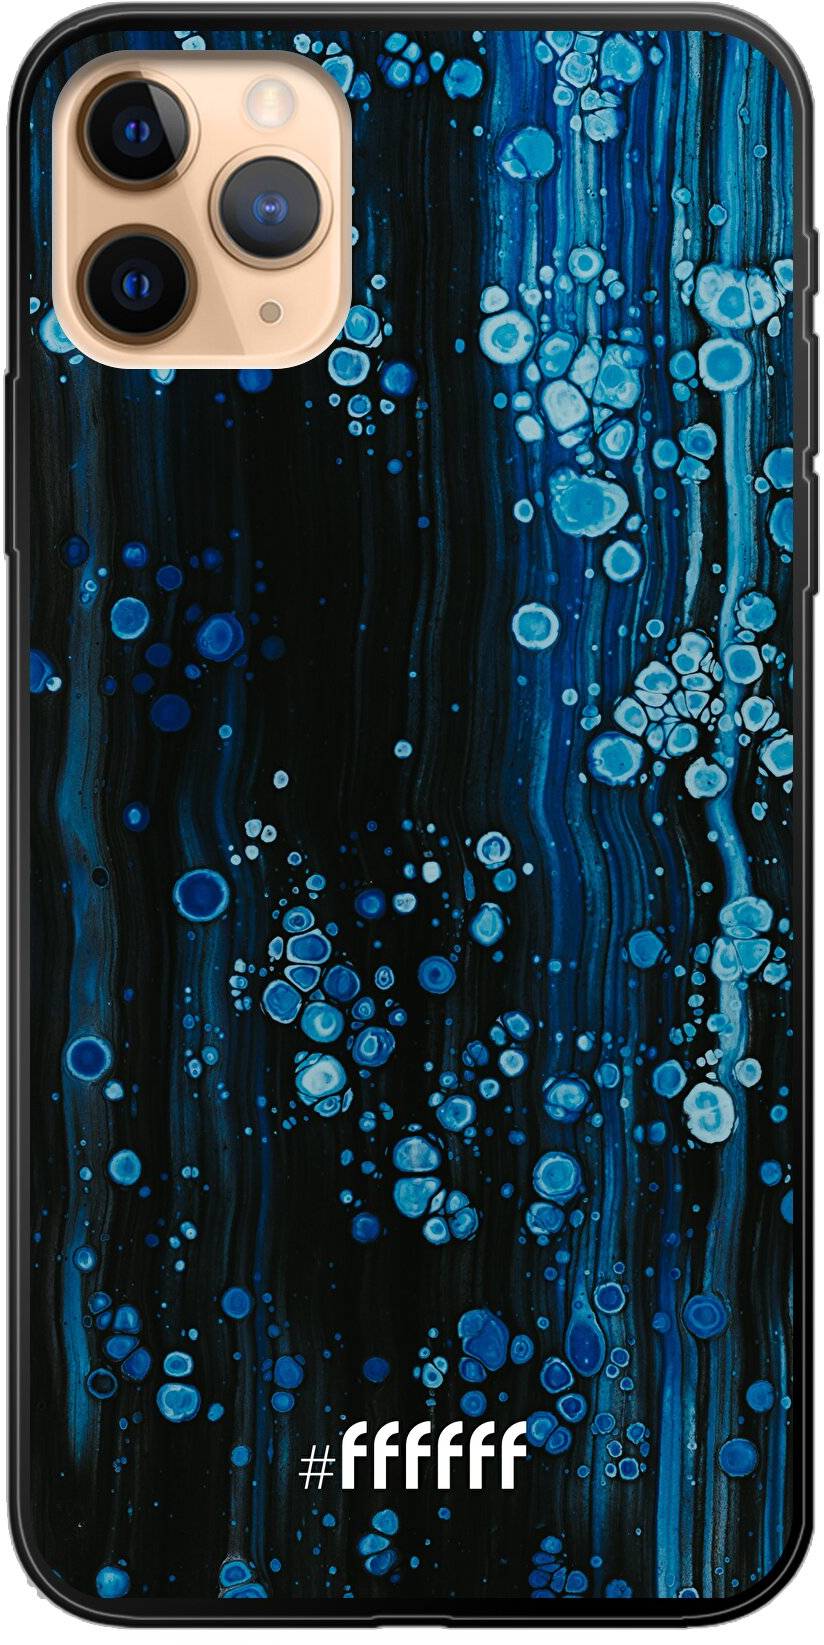 Bubbling Blues iPhone 11 Pro Max